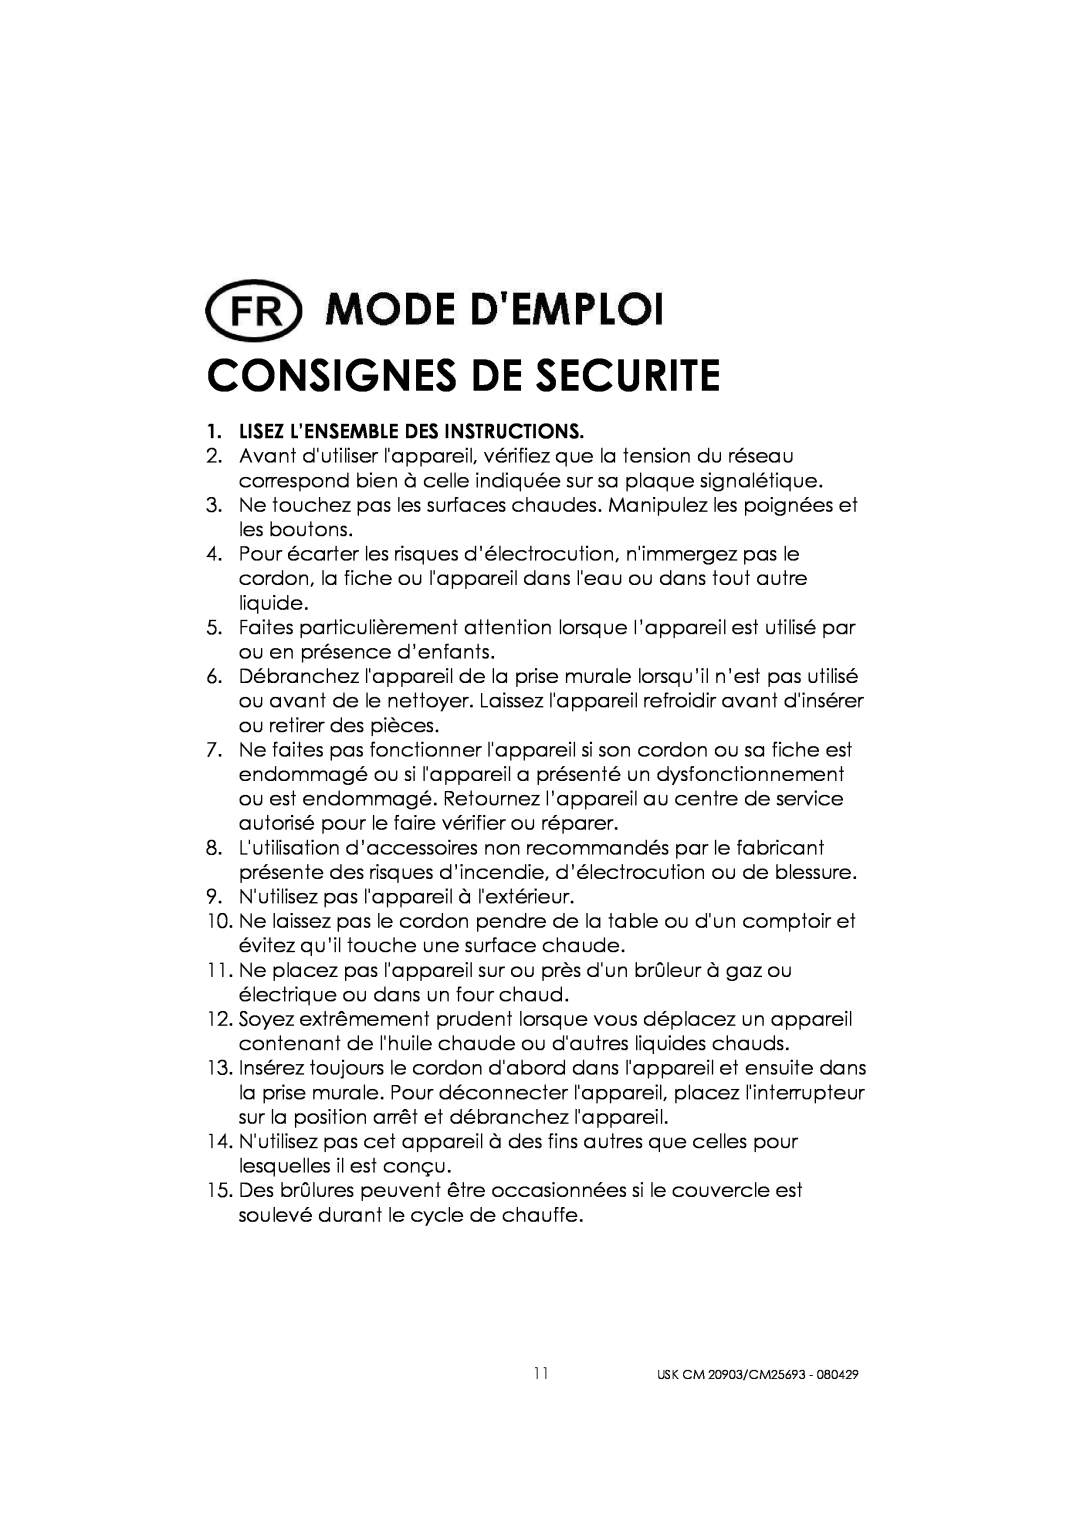 Kalorik CM 20903, CM 25693 manual Consignes De Securite 